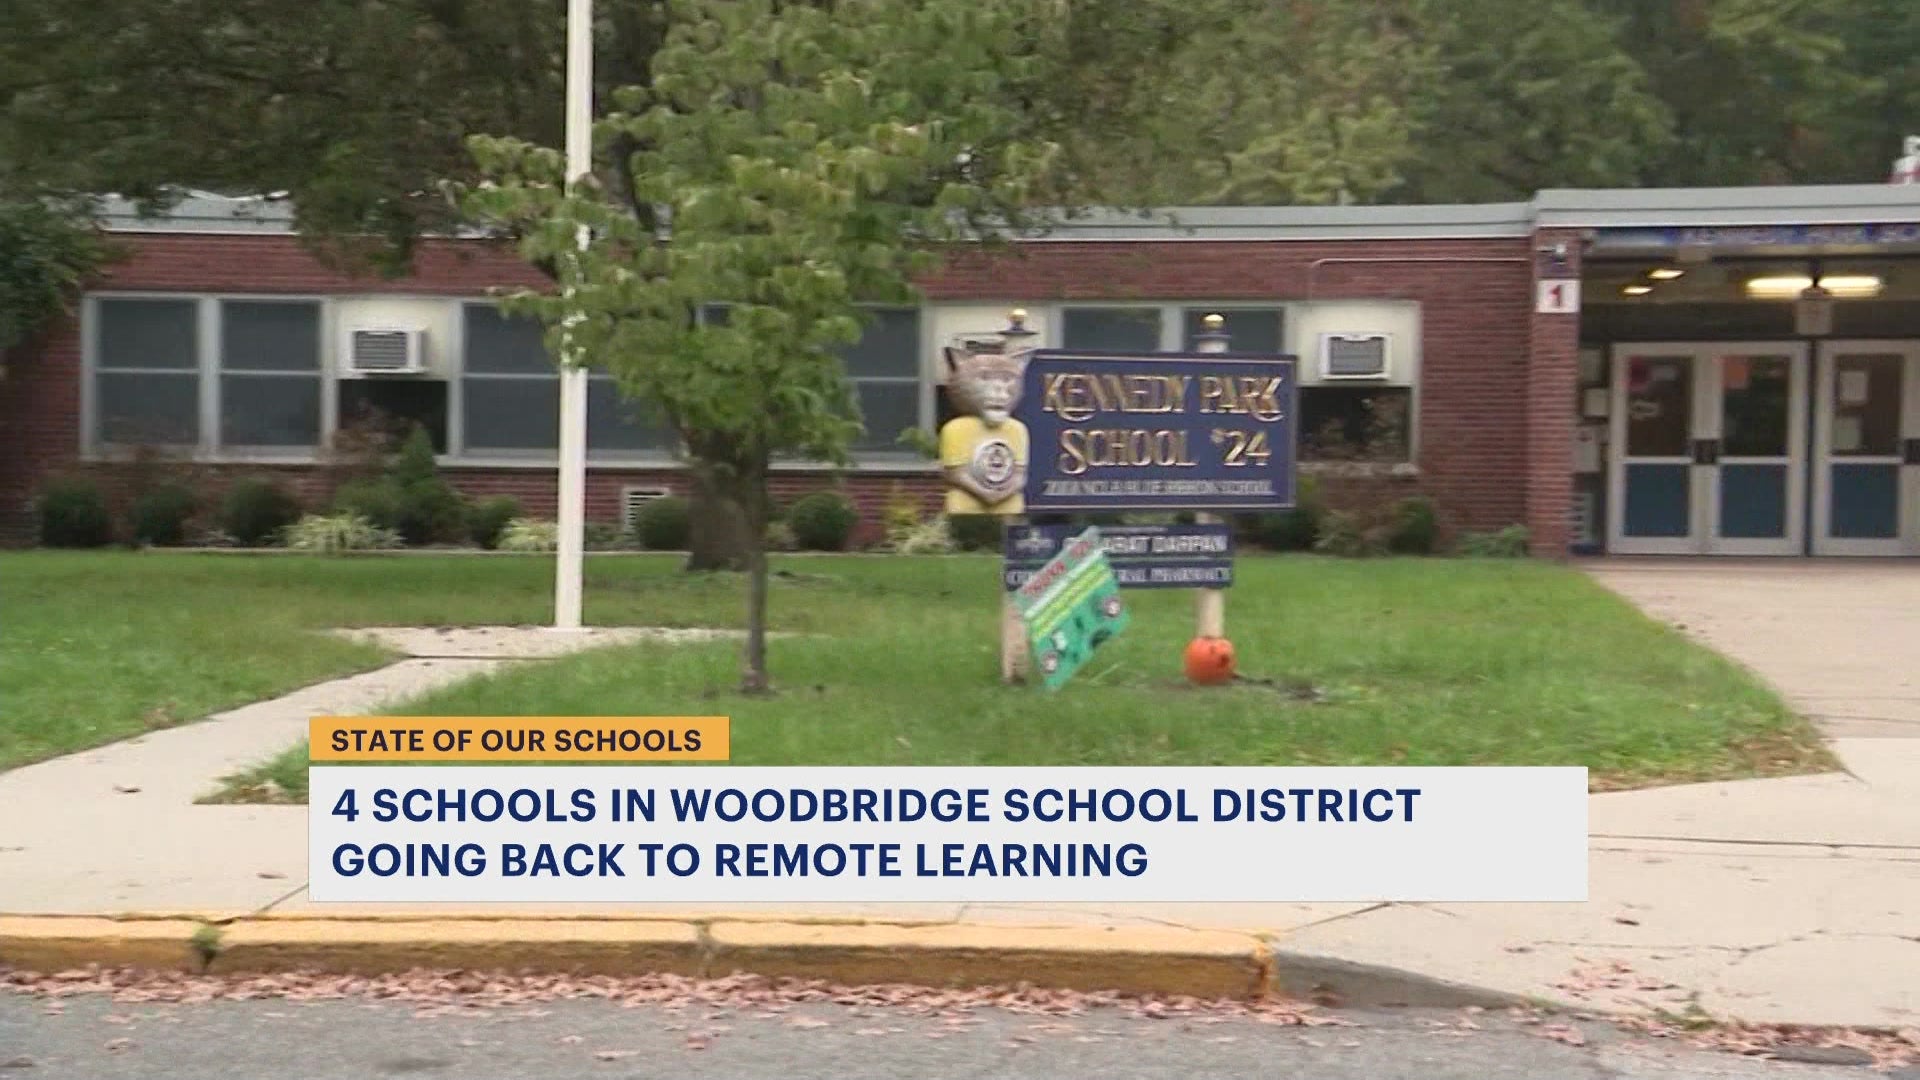 woodbridge township school